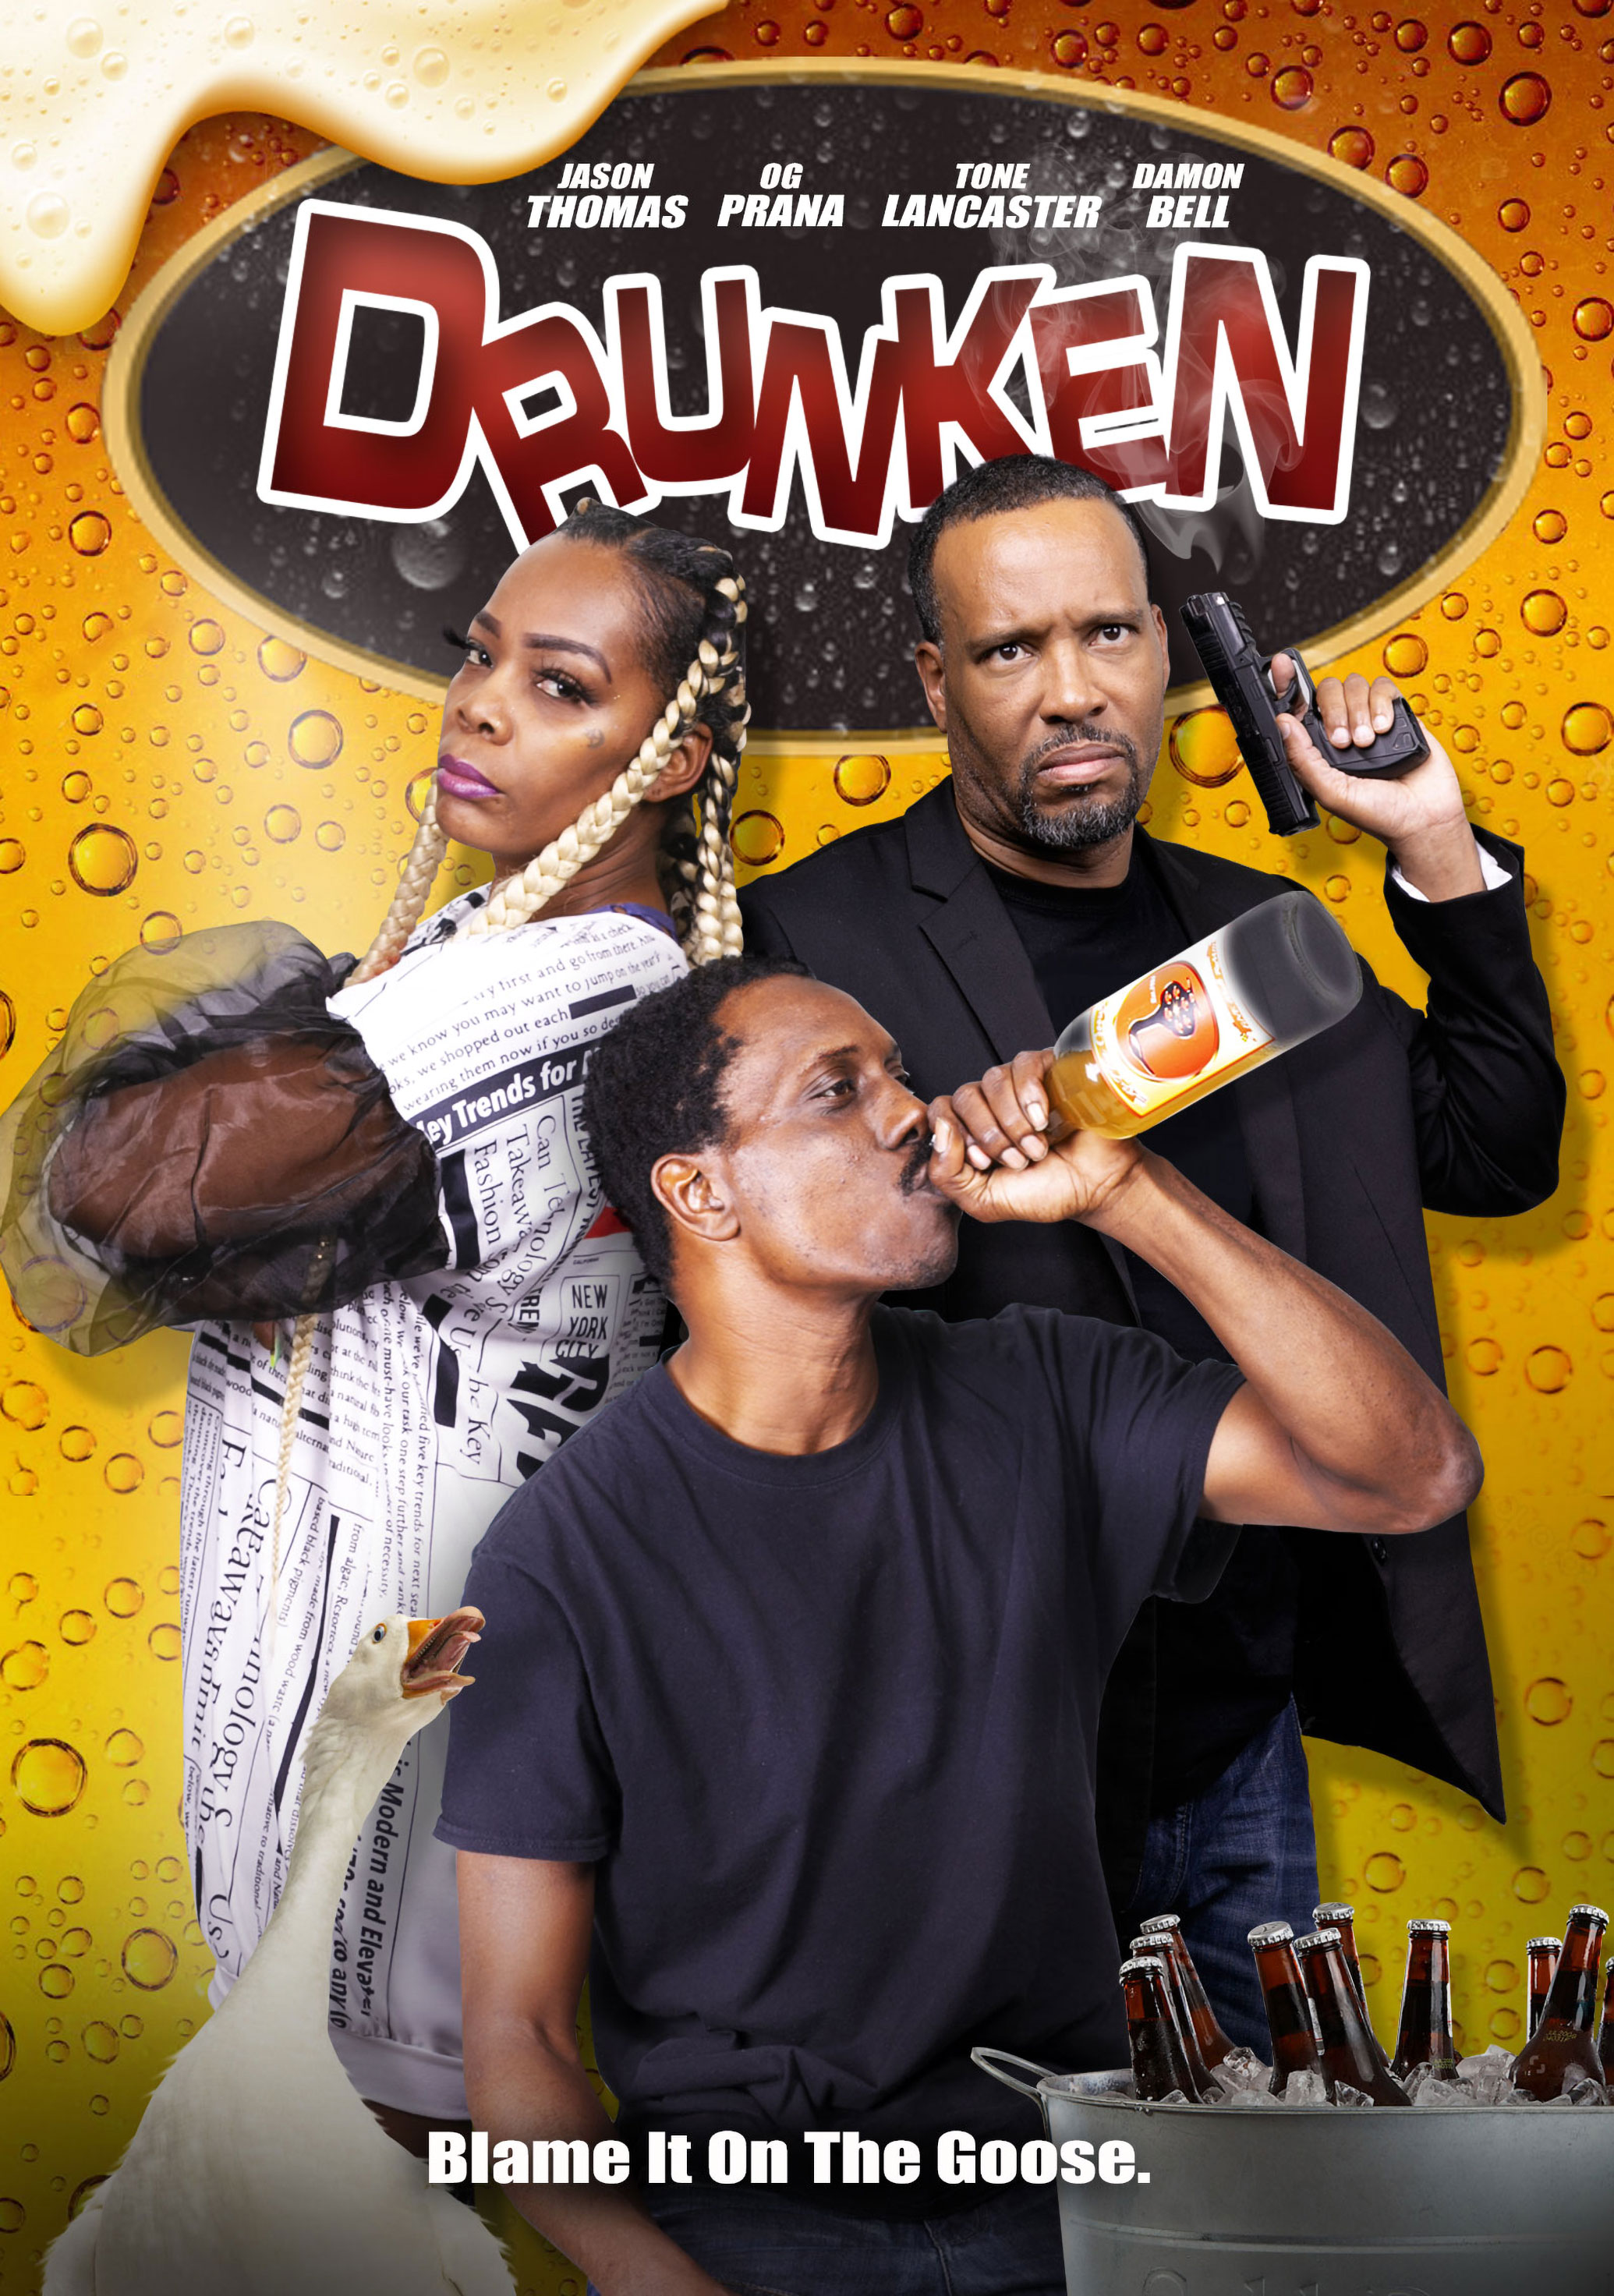 Drunk'eN (2020)